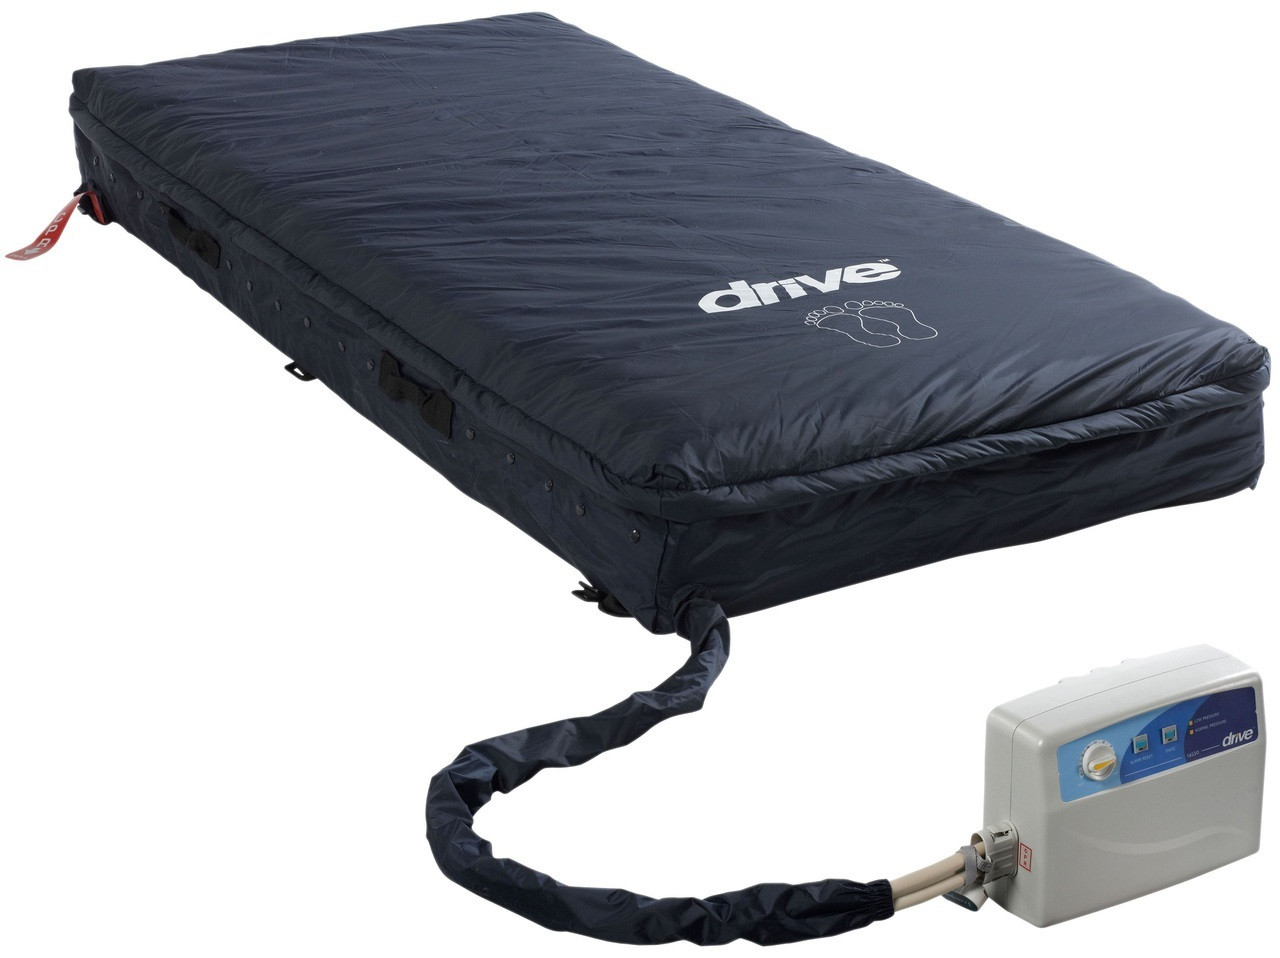 med-aire 8 alternating pressure mattress